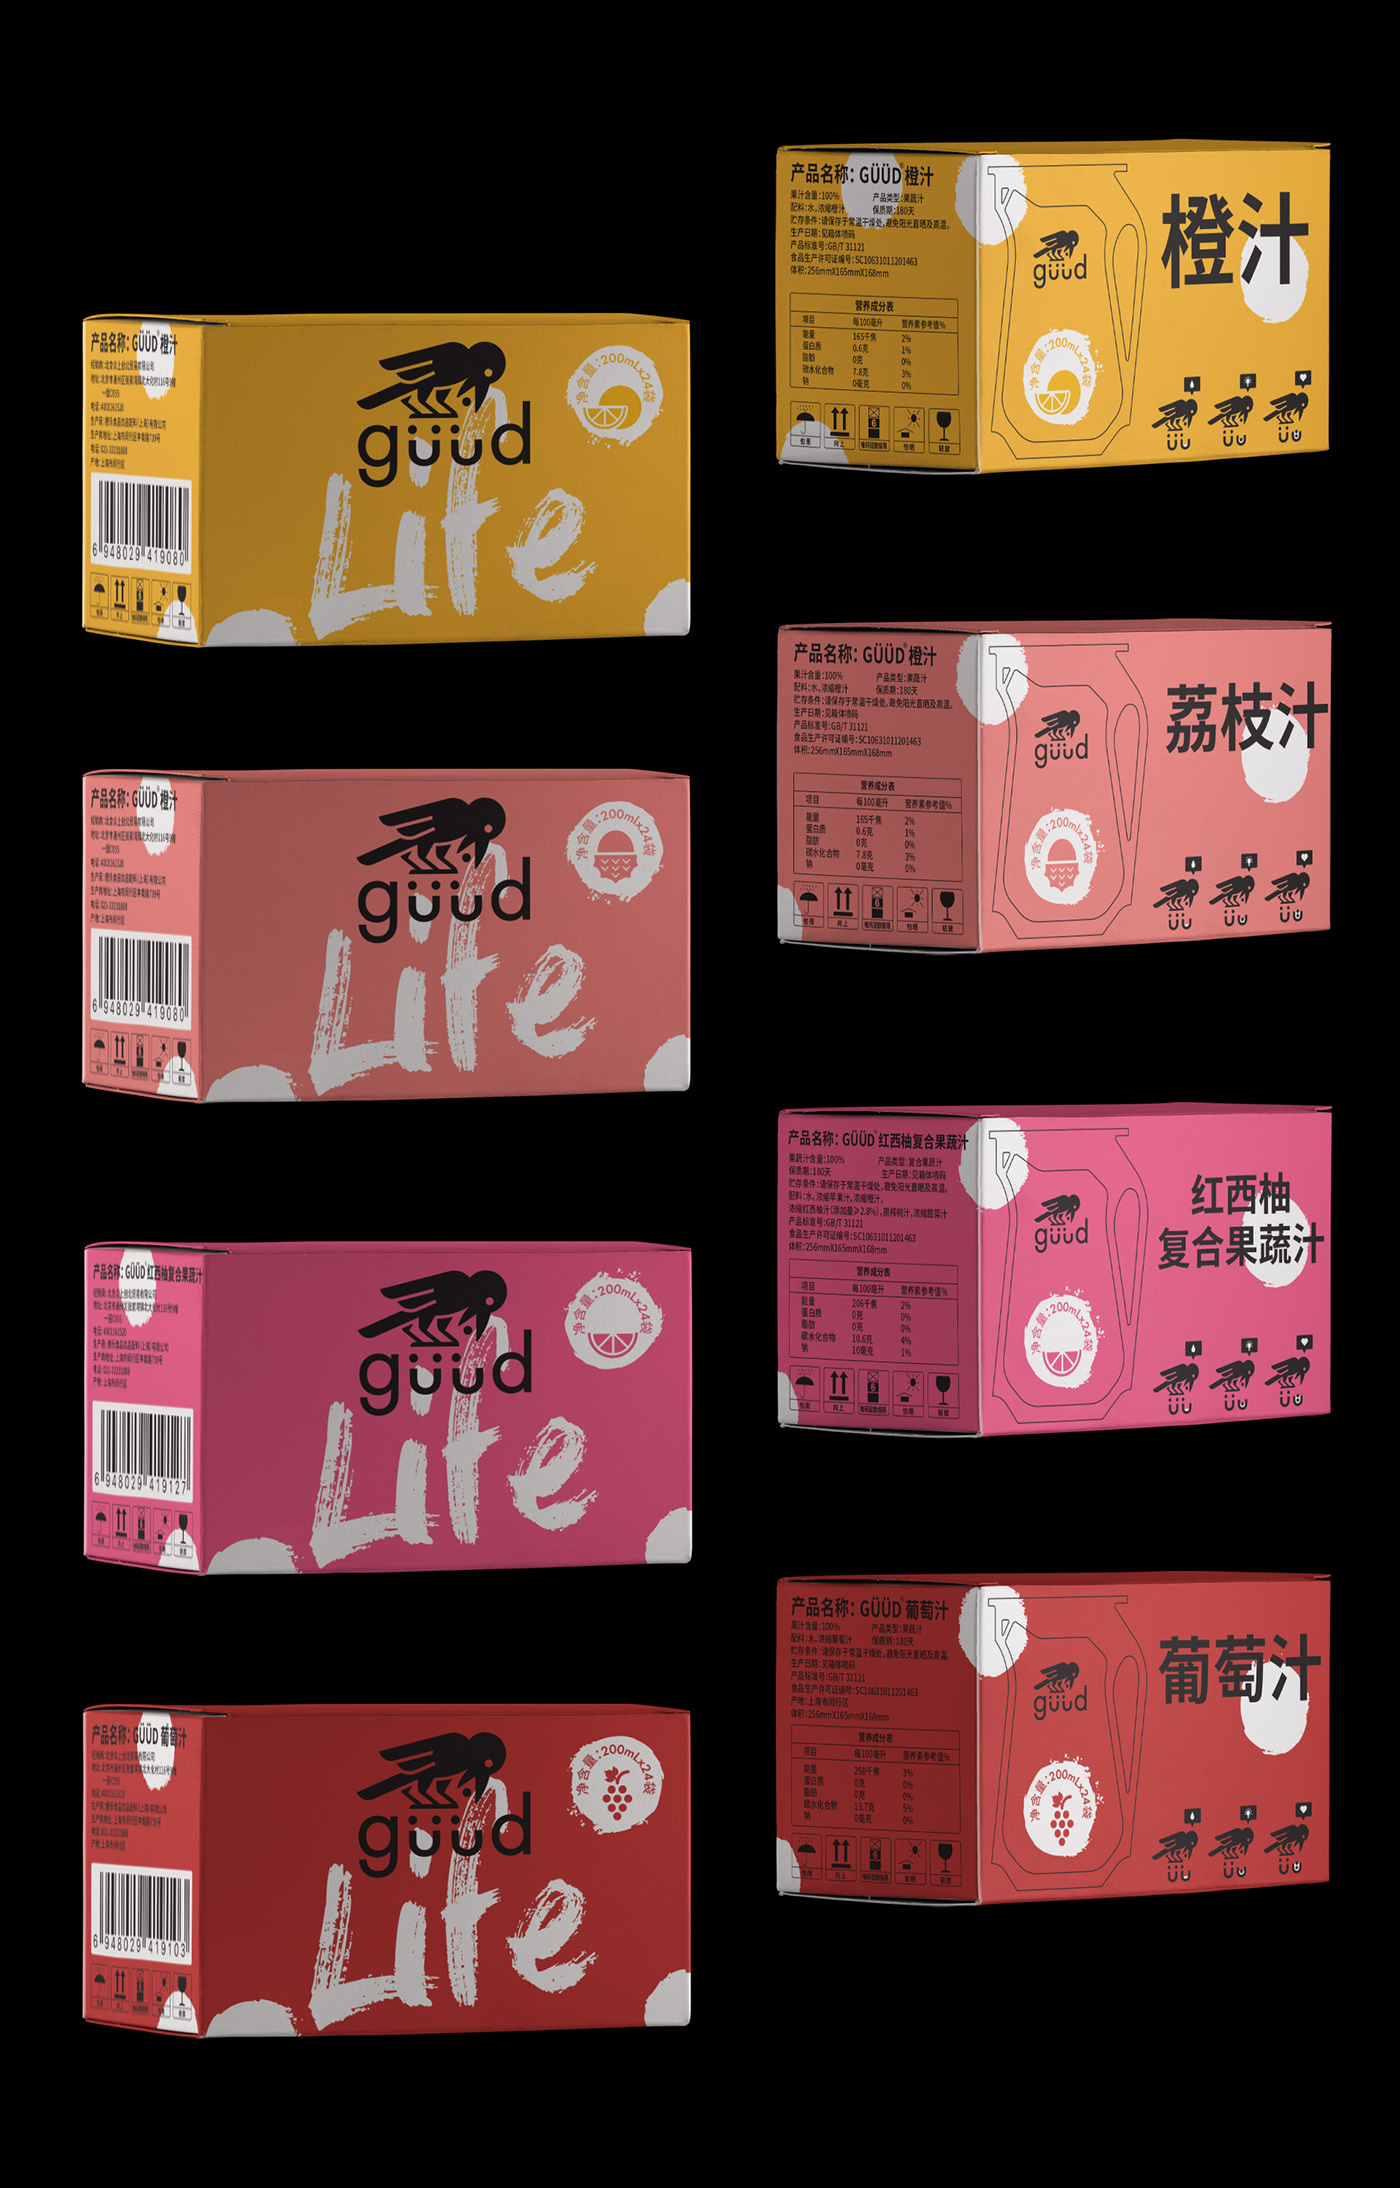 Packaging juice crow logo juice branding china market Yatagarasu bird logo fruits dynamic identity visual identity